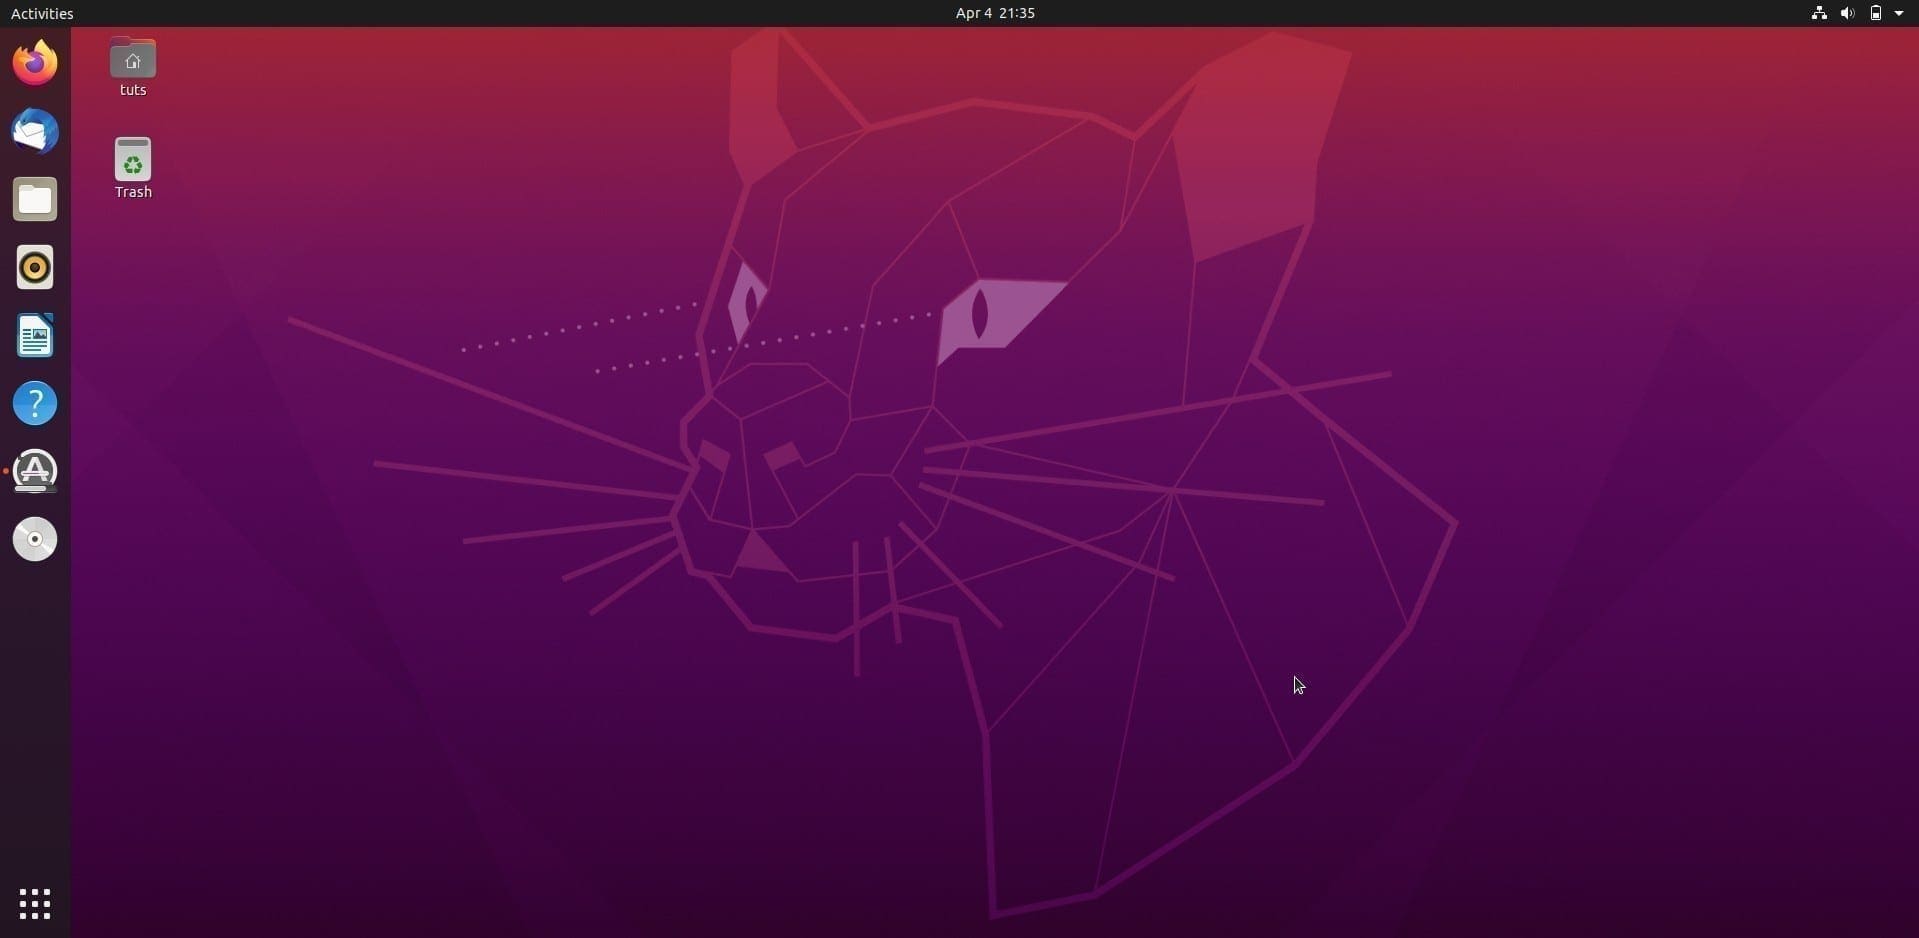 Ubuntu 20.04 LTS Focal Fossa Desktop